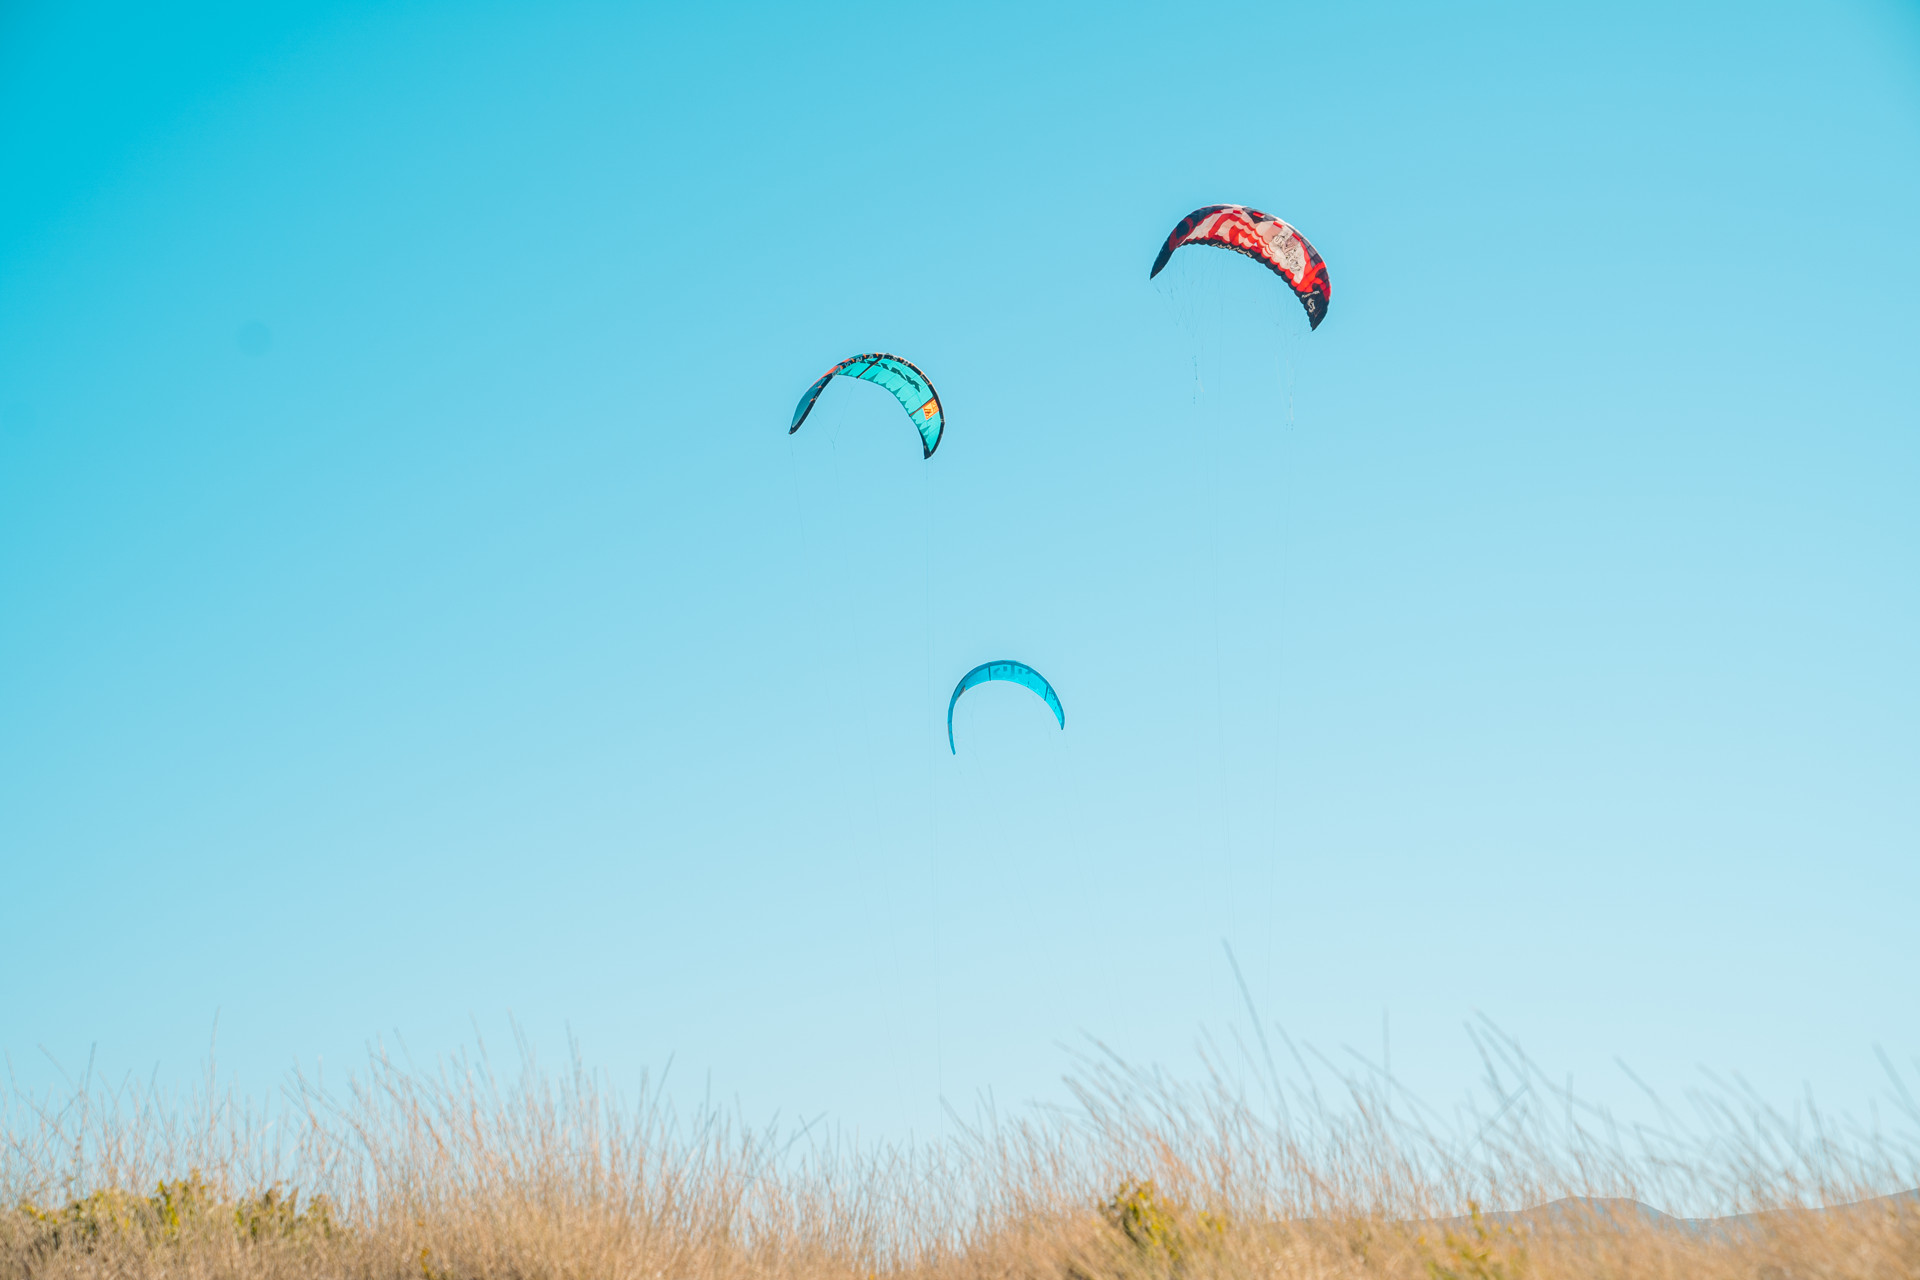 Kitesurfers enjoying Pounda beach in Paros